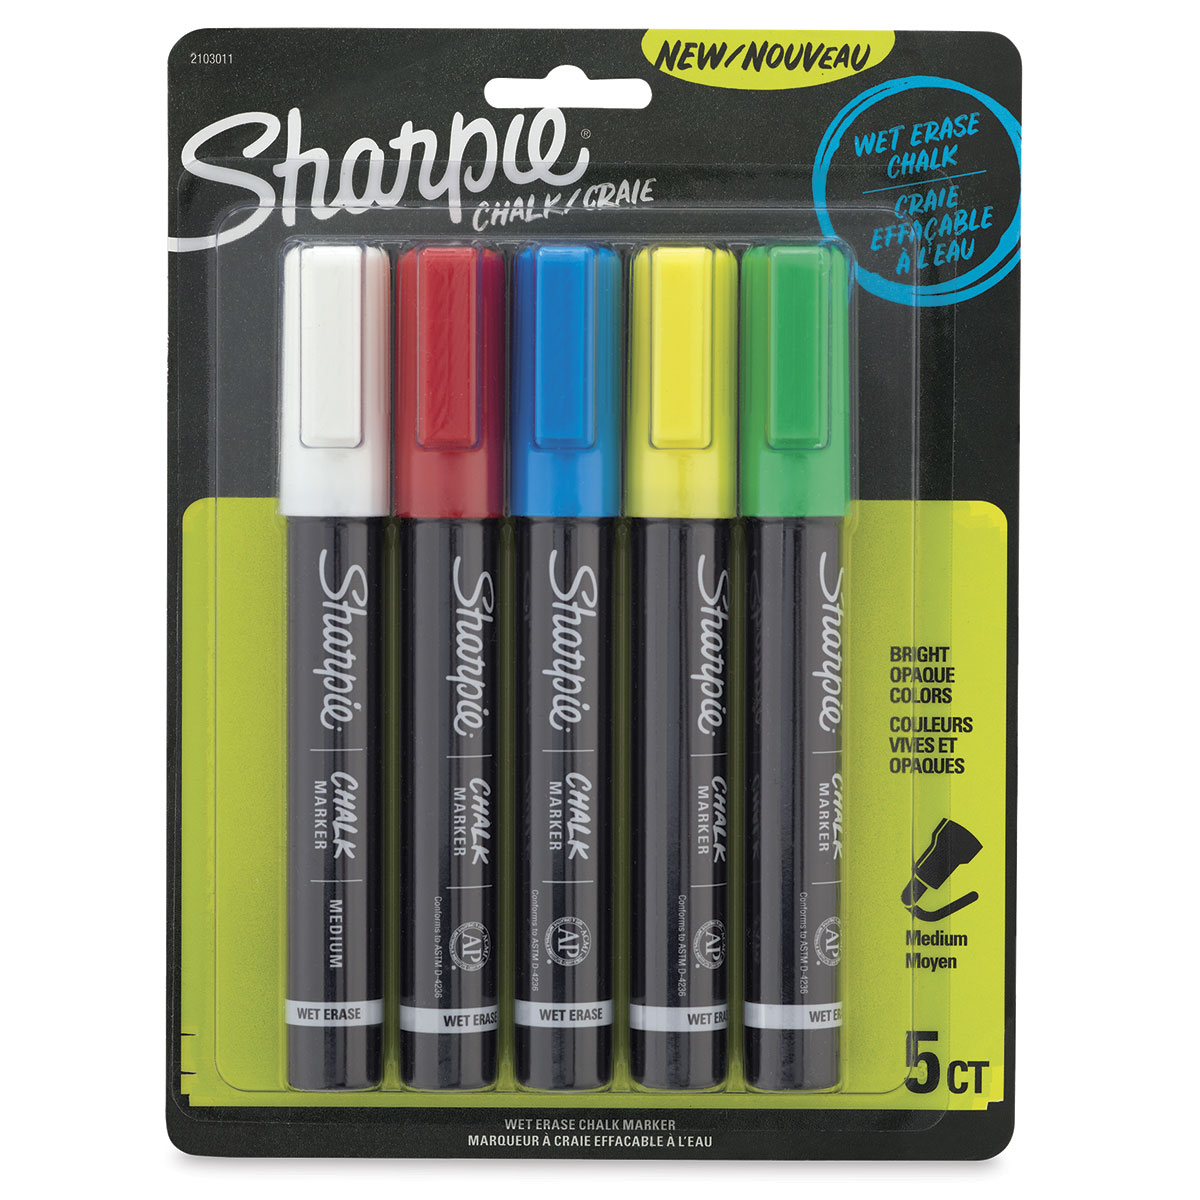 Sharpie S-Note Creative Markers - Set of 6, BLICK Art Materials